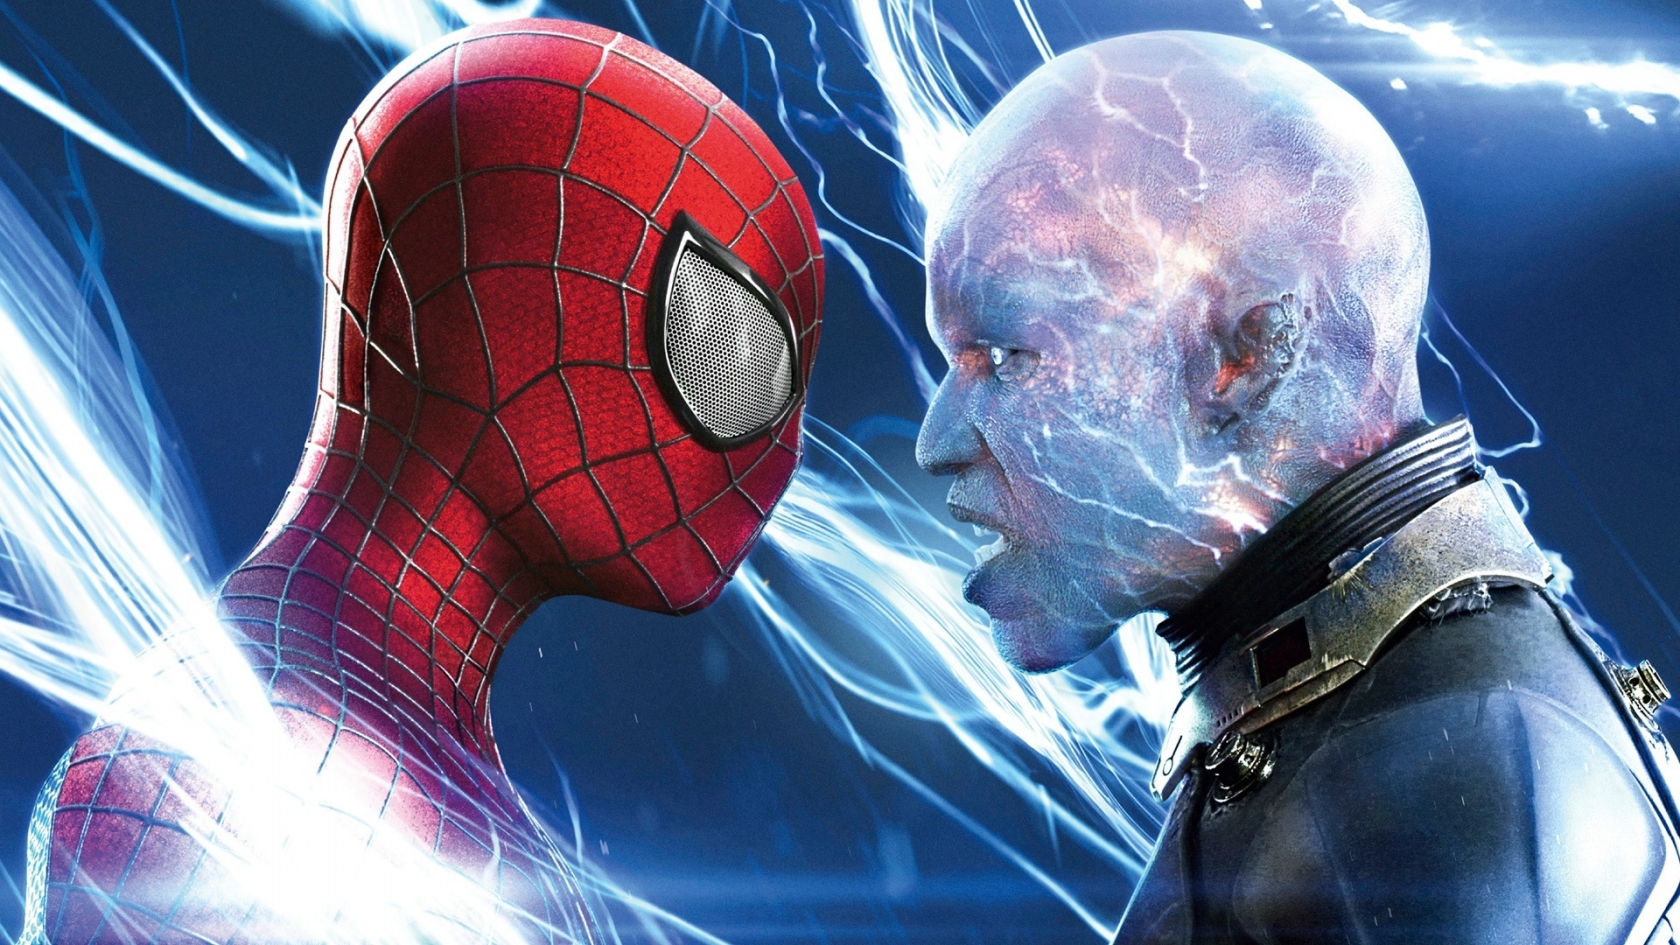 Spiderman vs Electro for 1680 x 945 HDTV resolution